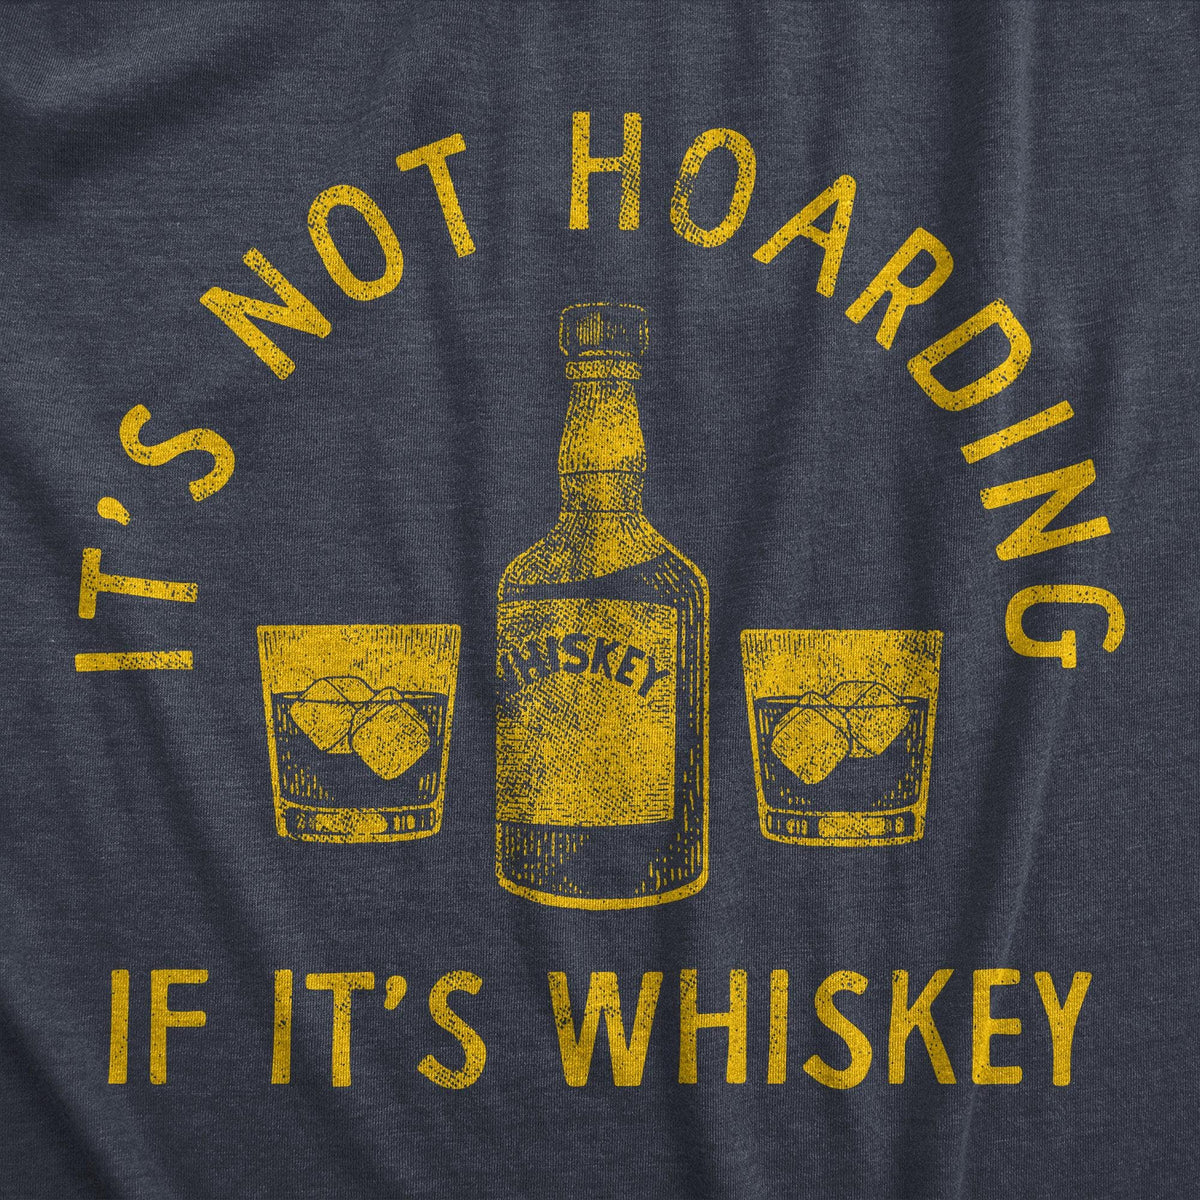 Its Not Hoarding If Its Whiskey Men&#39;s Tshirt  -  Crazy Dog T-Shirts